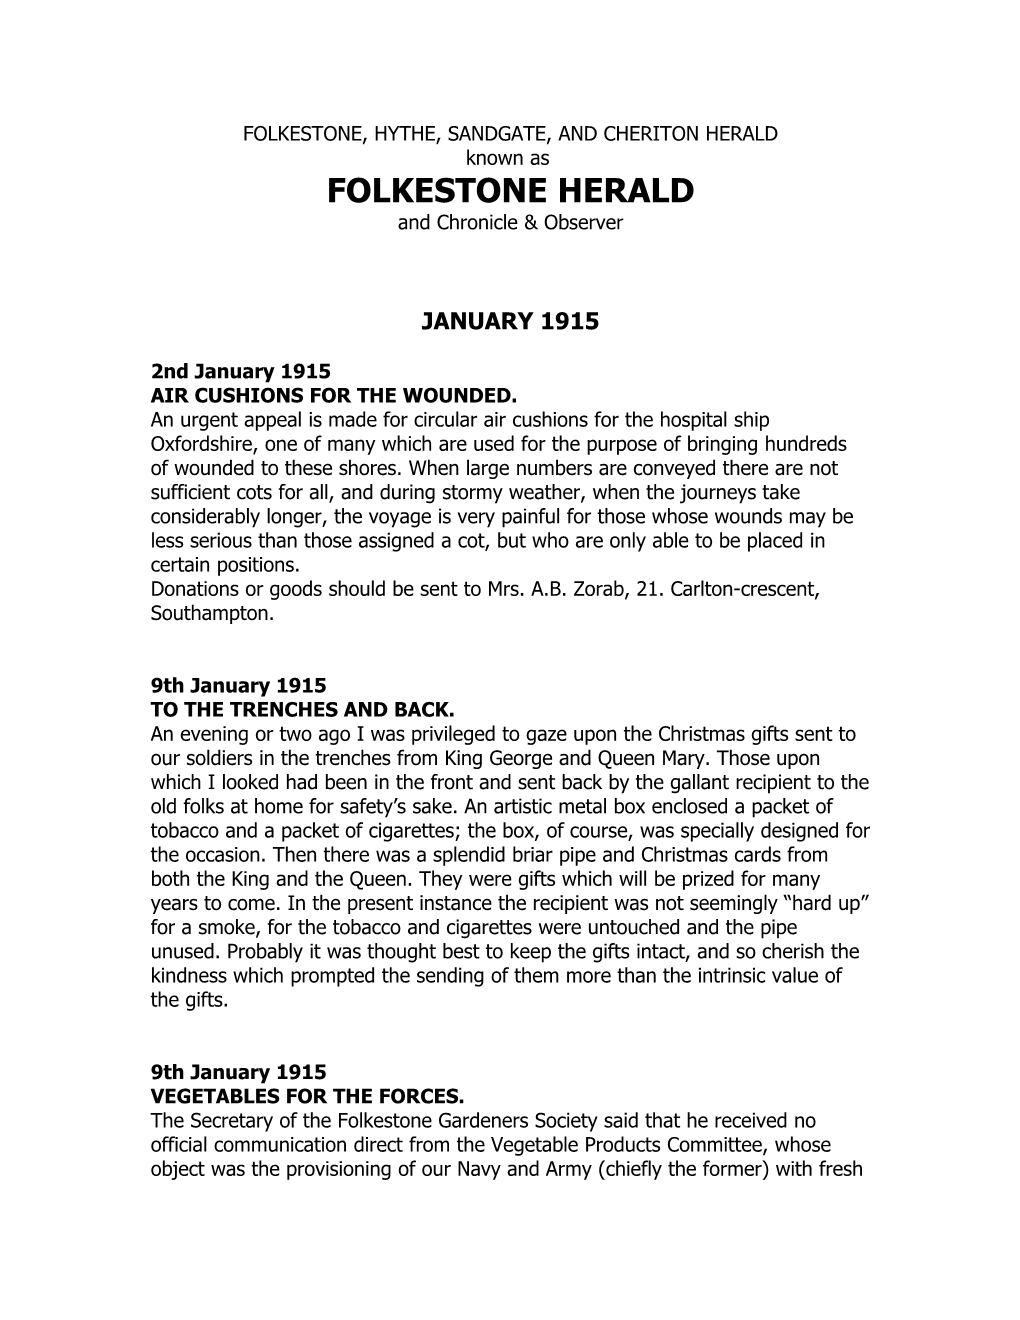 Folkestone, Hythe, Sandgate, and Cheriton Herald